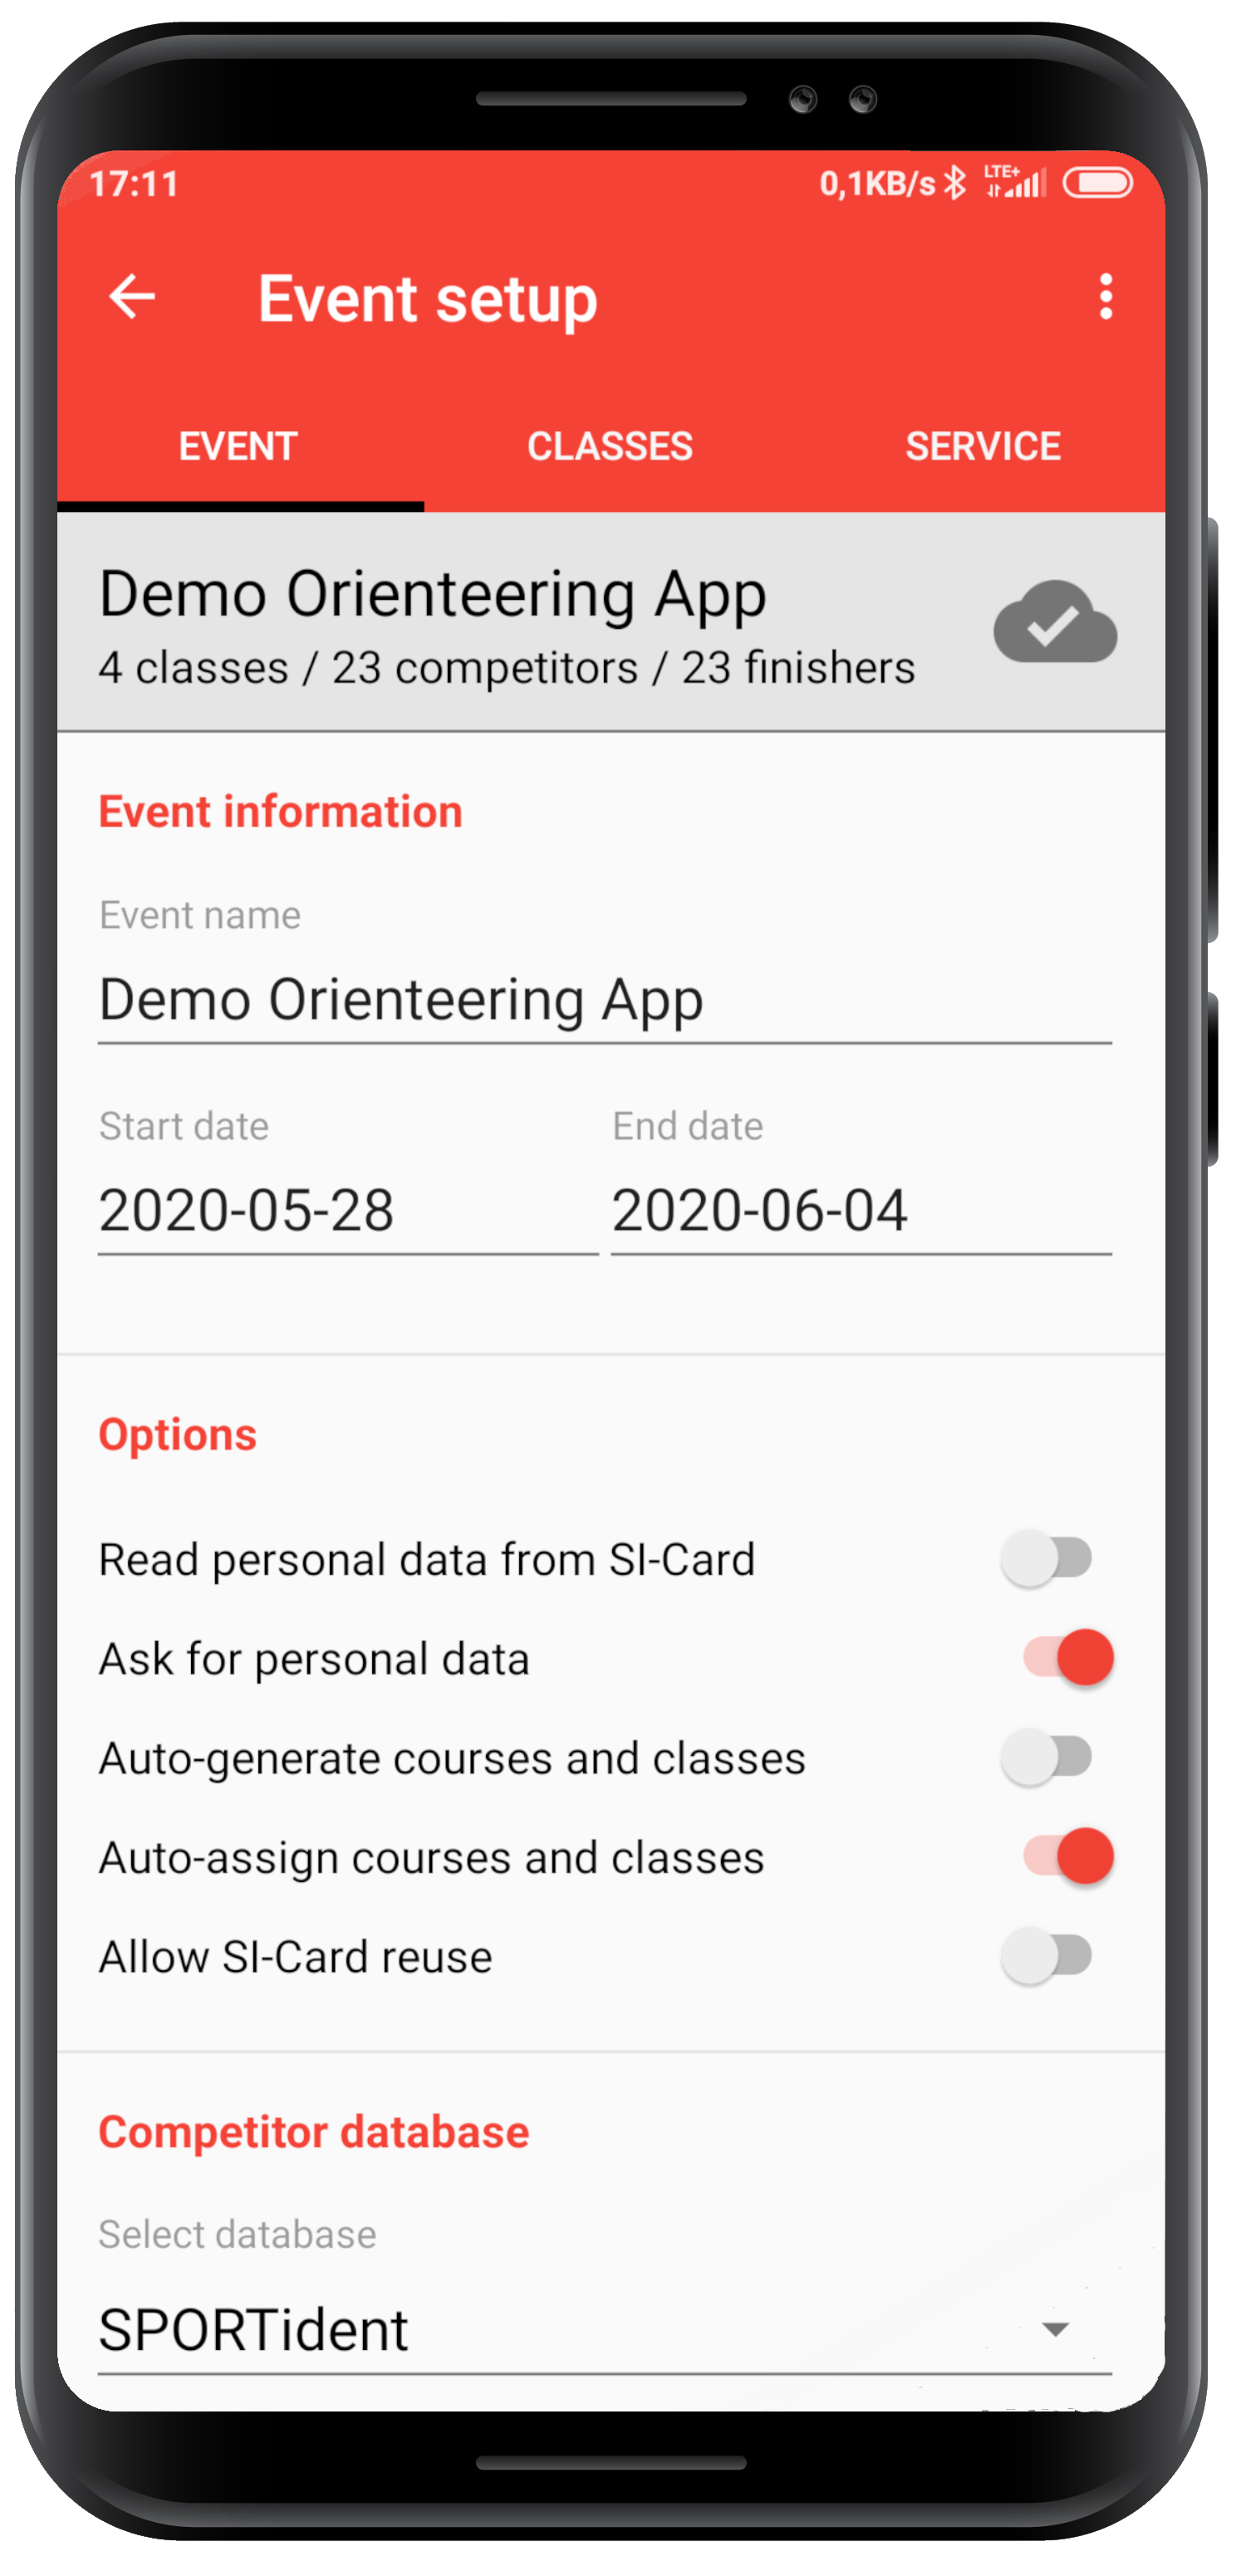 SPORTident Orienteering App: Event setup